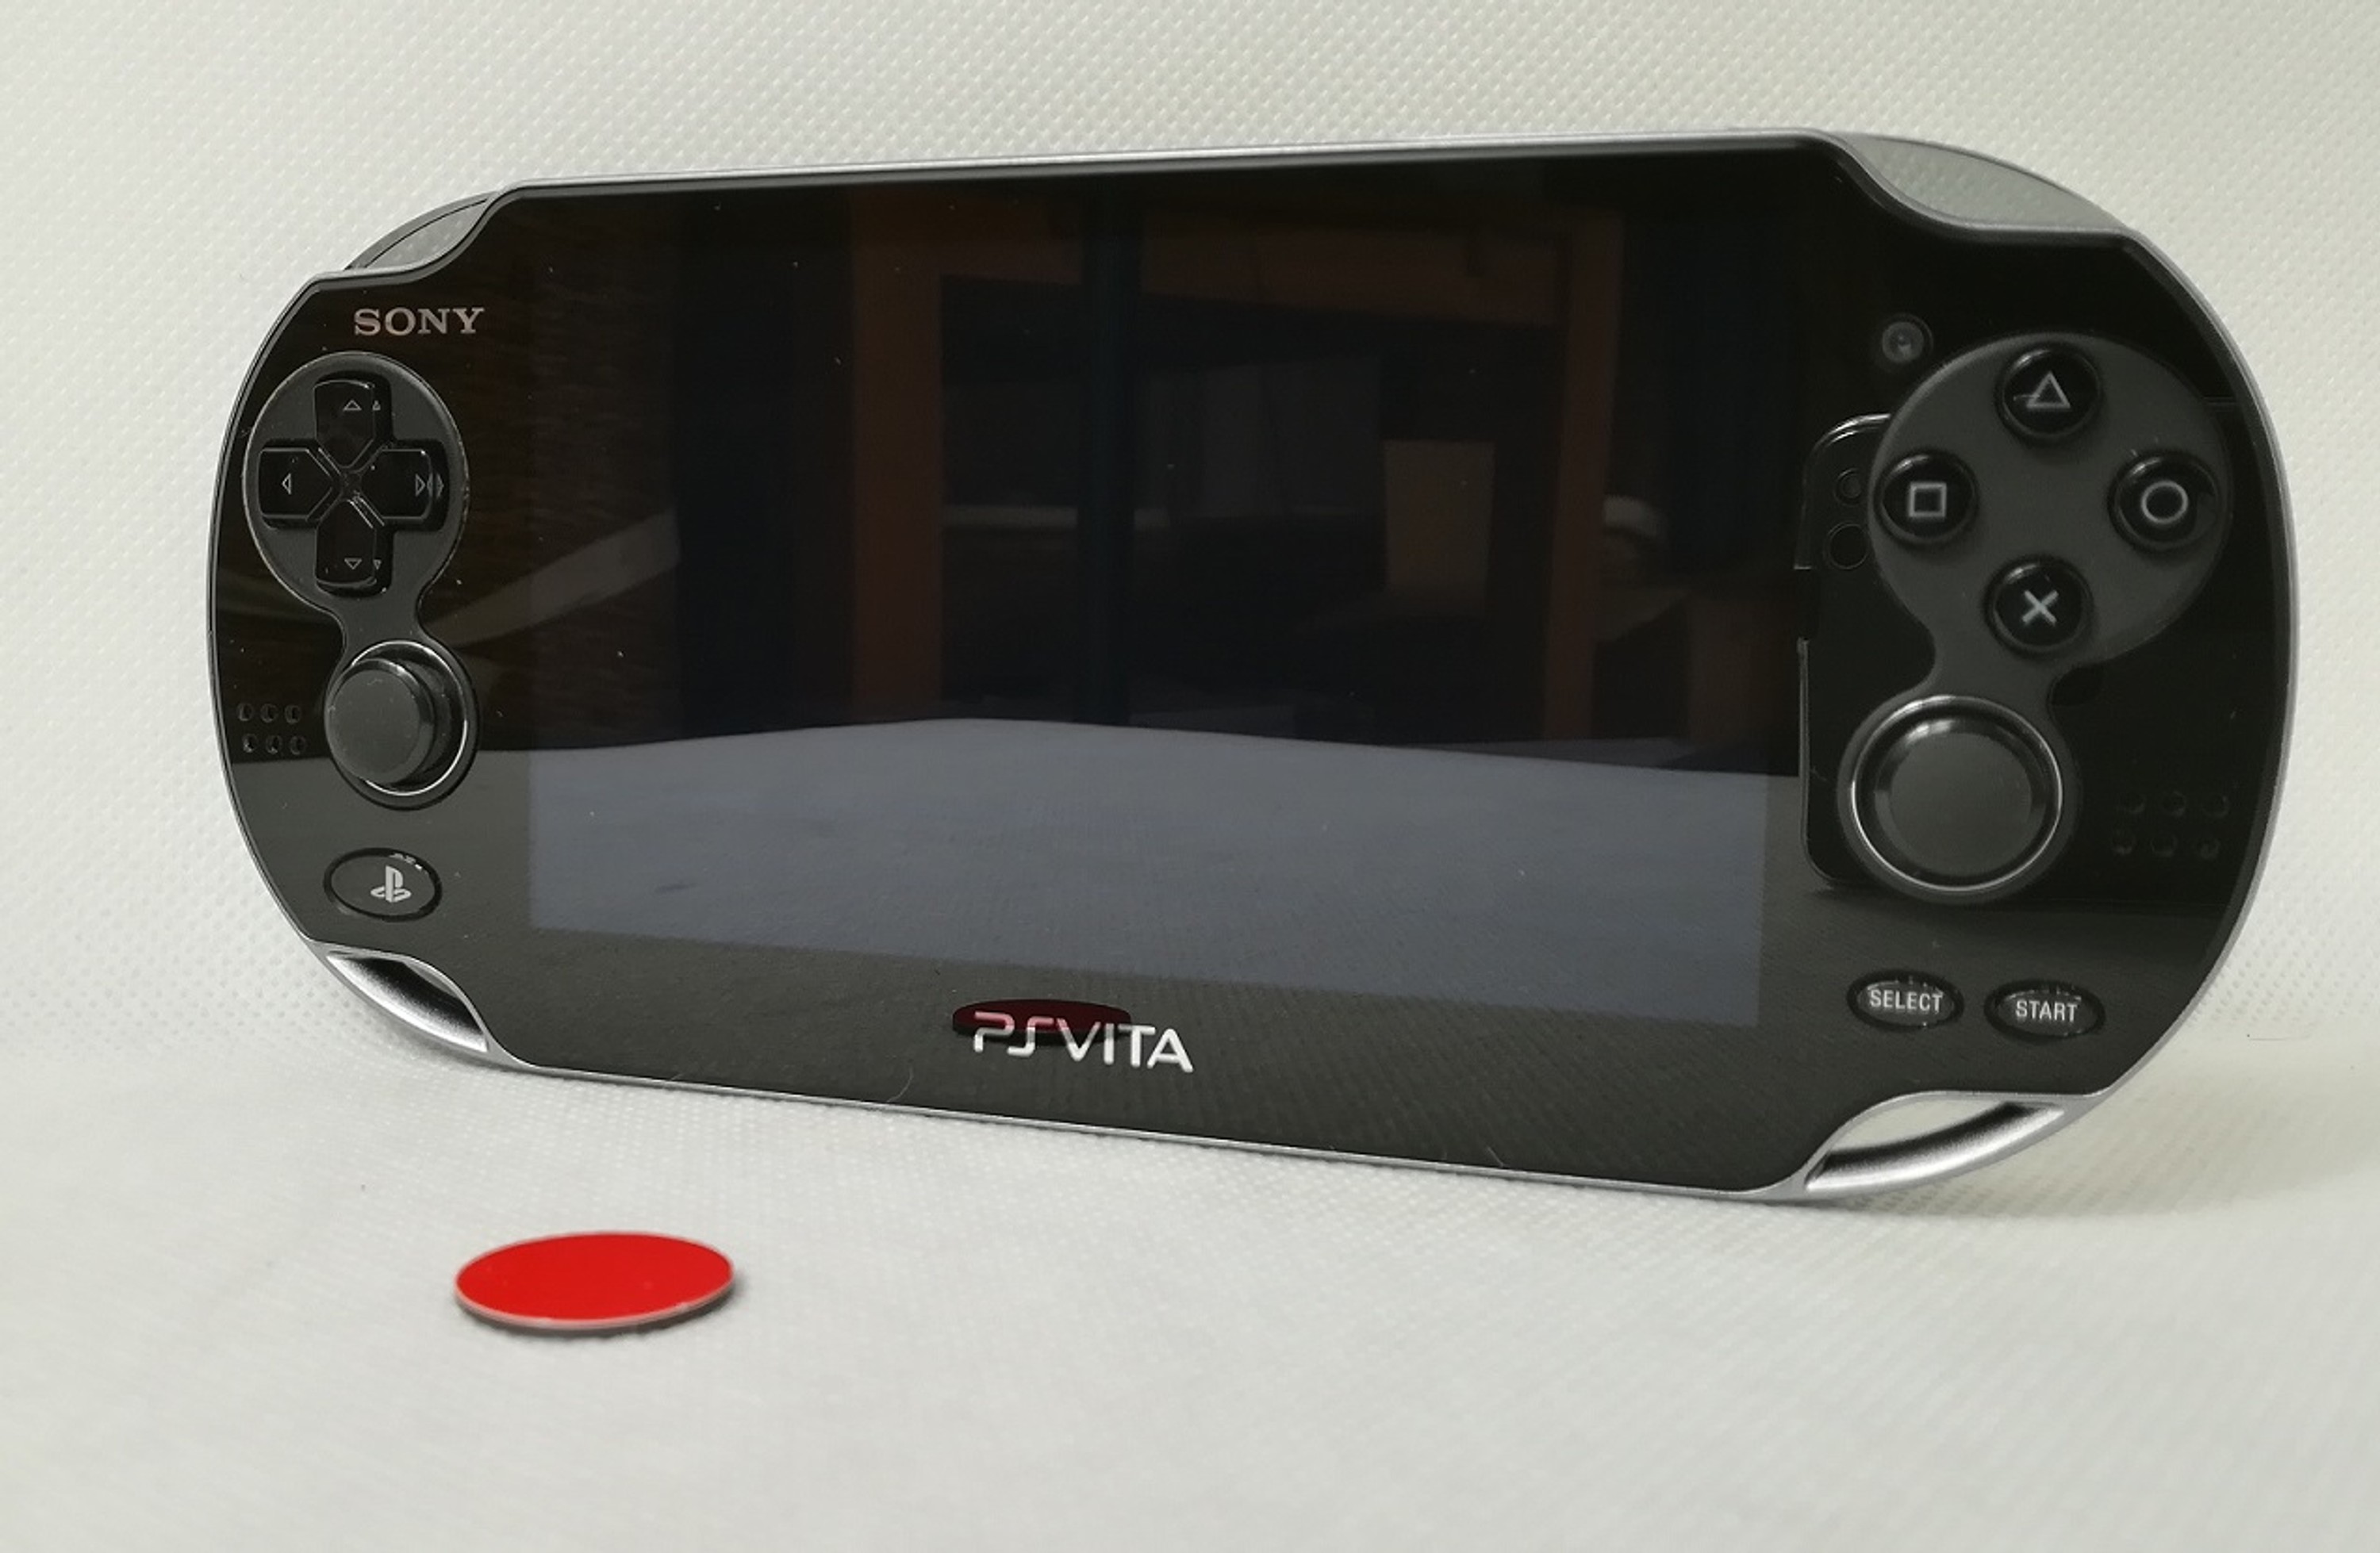 Playstation Vita PCH-1004 Console | PS Vita | Black Used Version 3.73